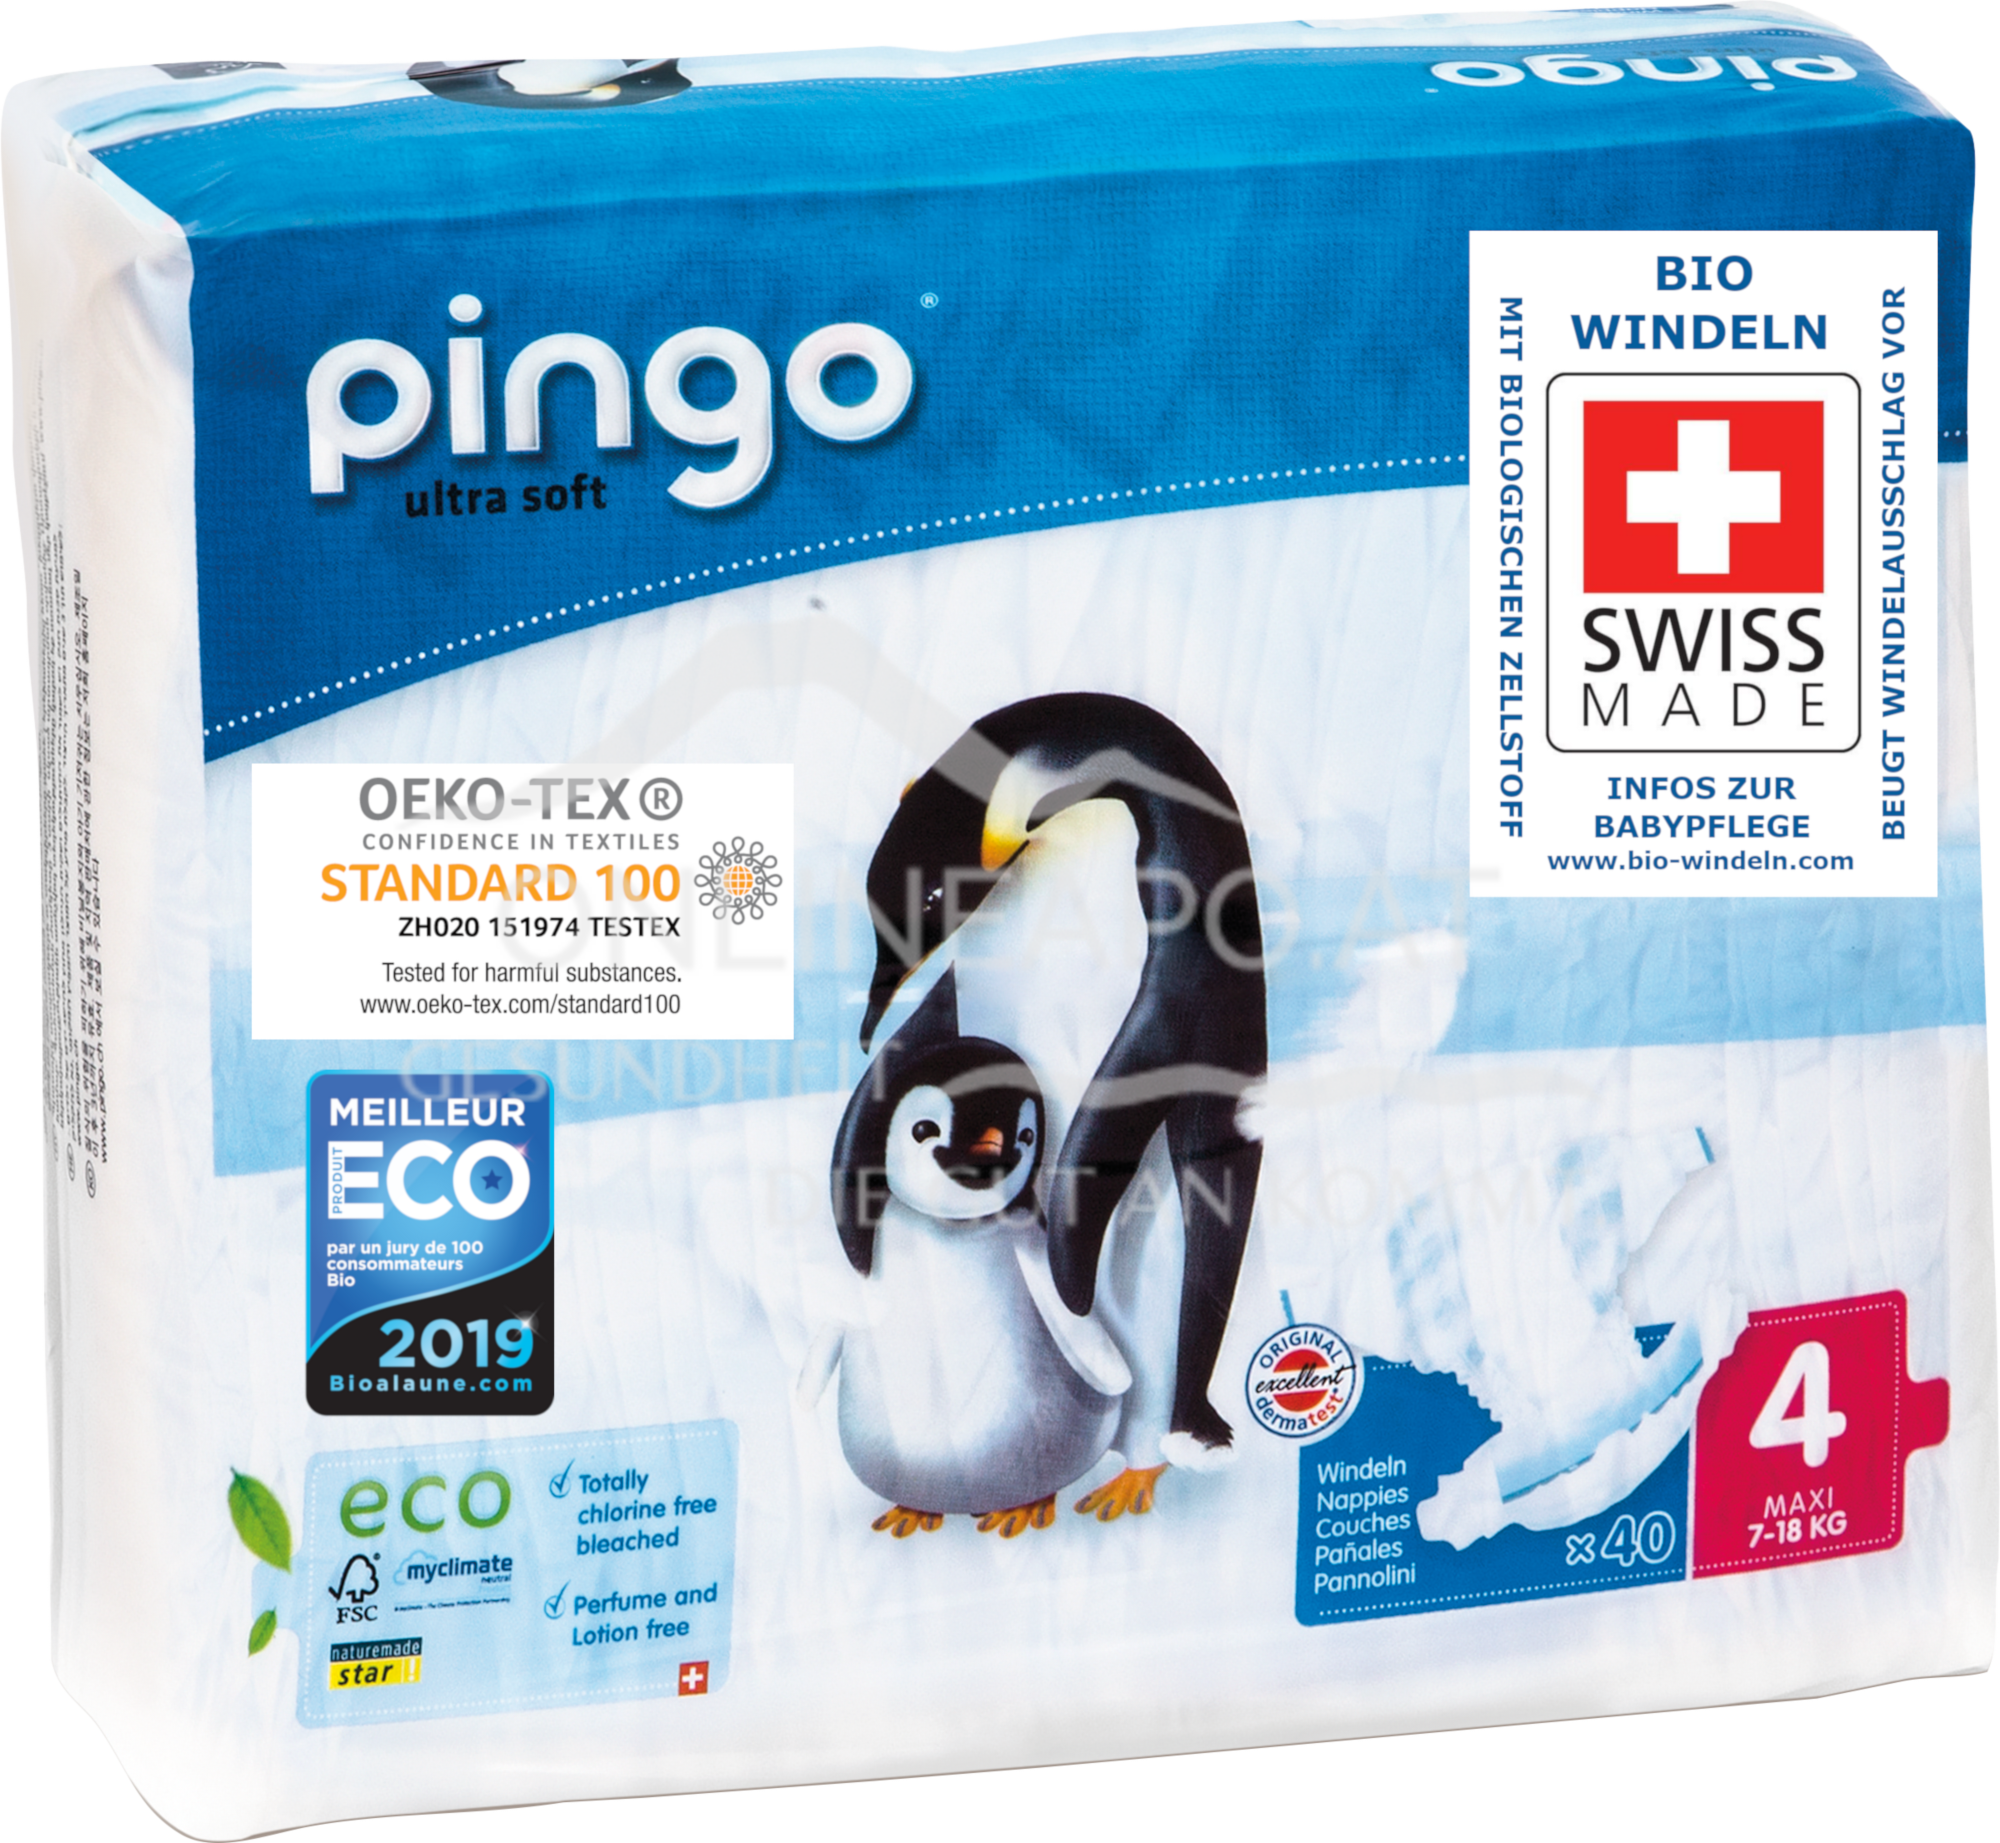 Bio Windeln Maxi 7-18kg Pinguin – Pingo Swiss